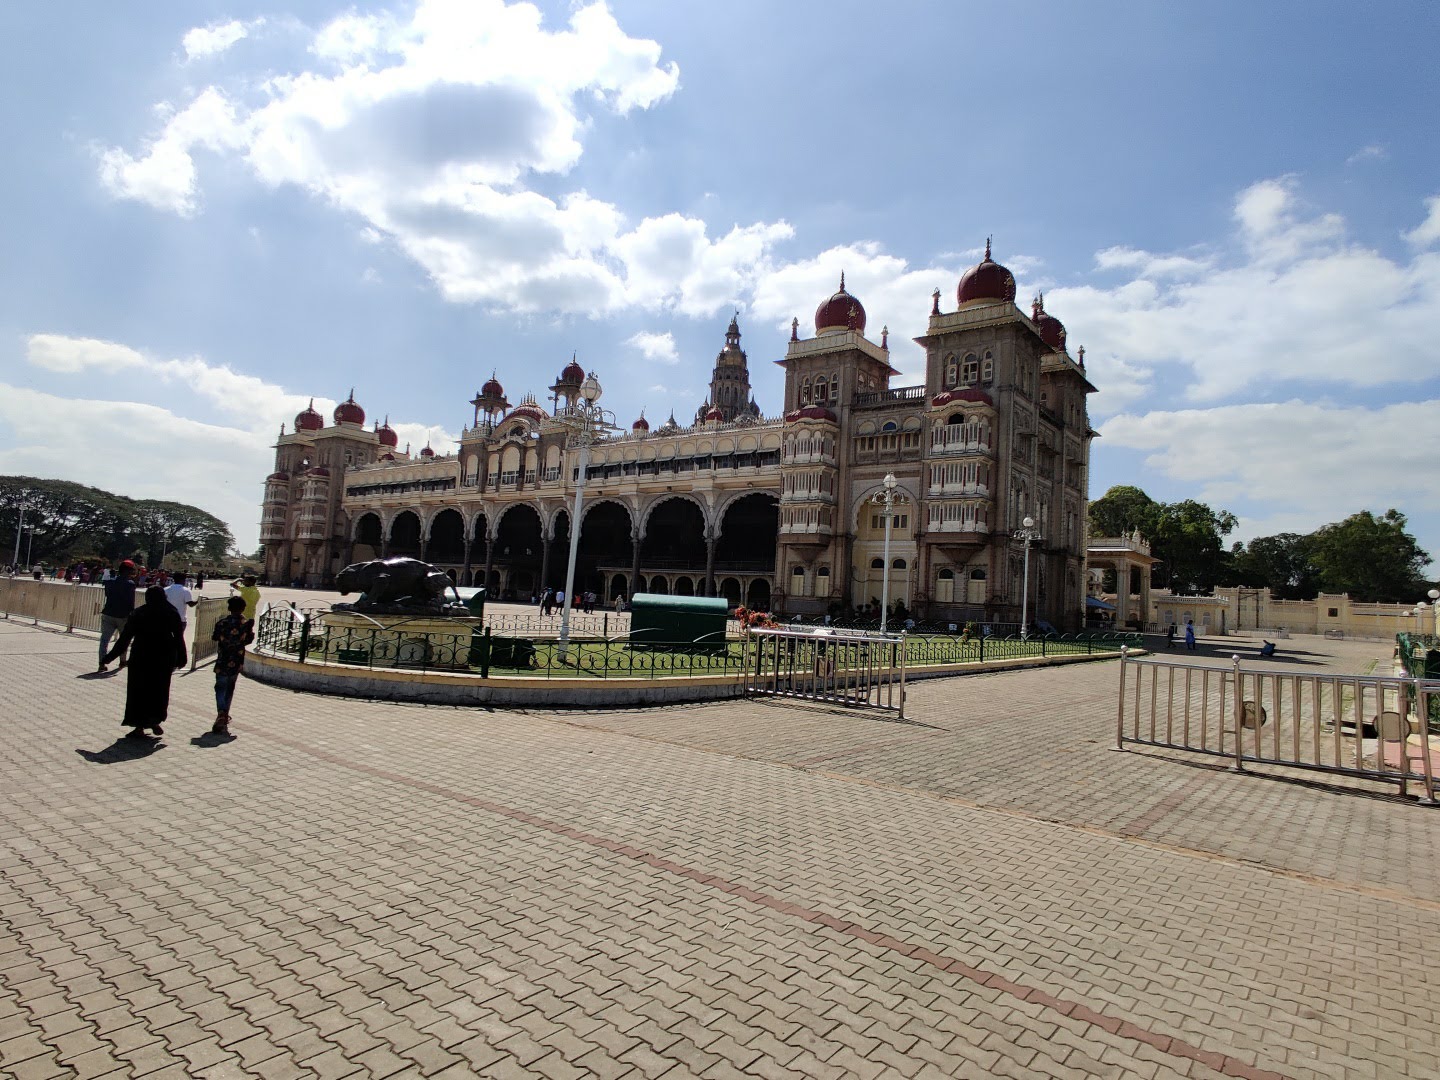 Mysore palace